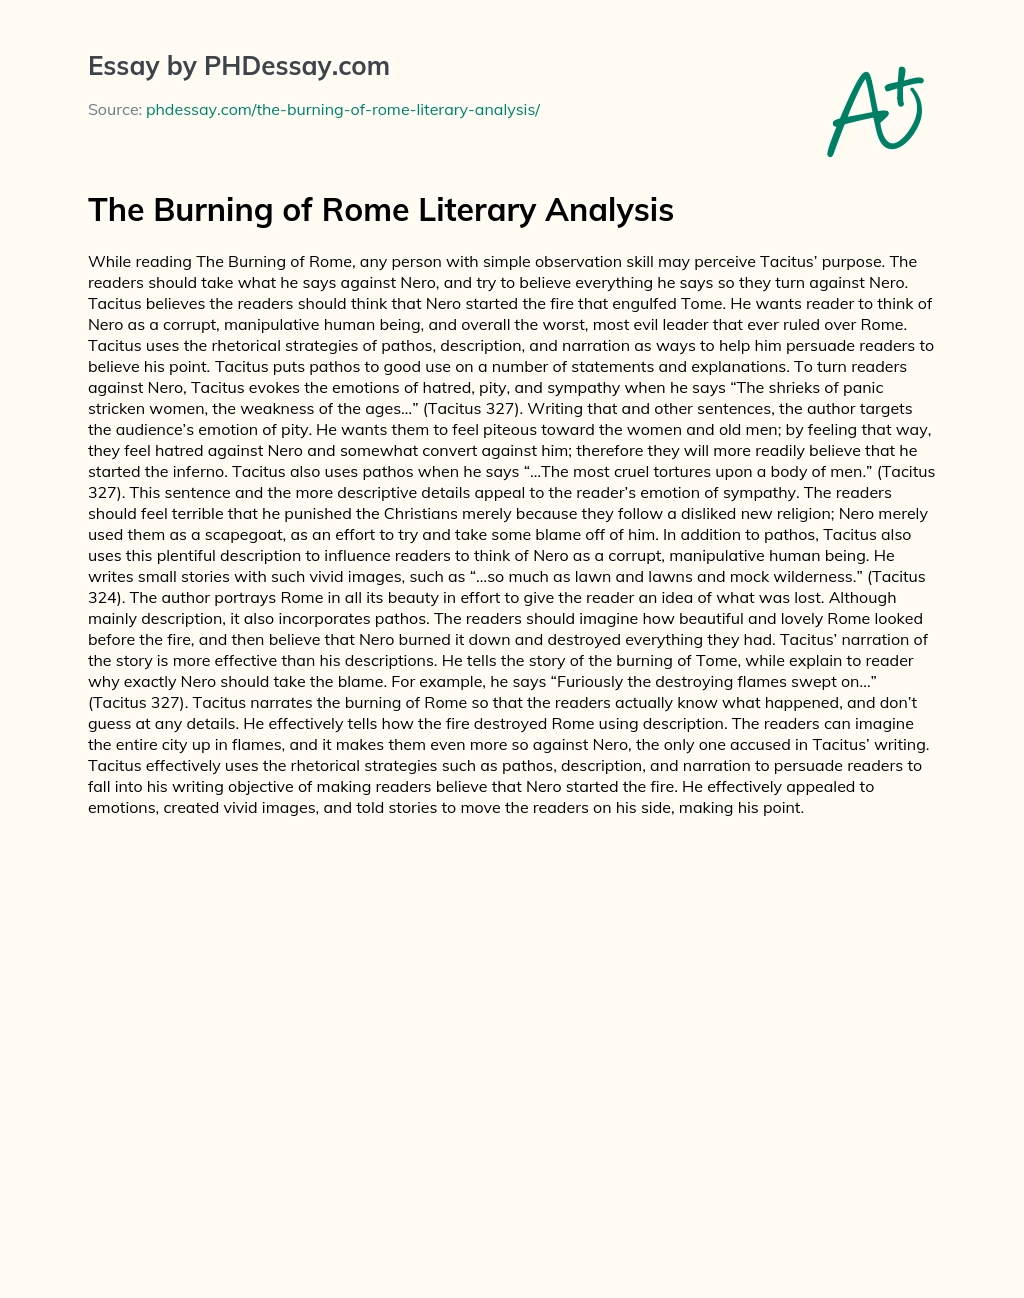 The Burning of Rome Literary Analysis essay